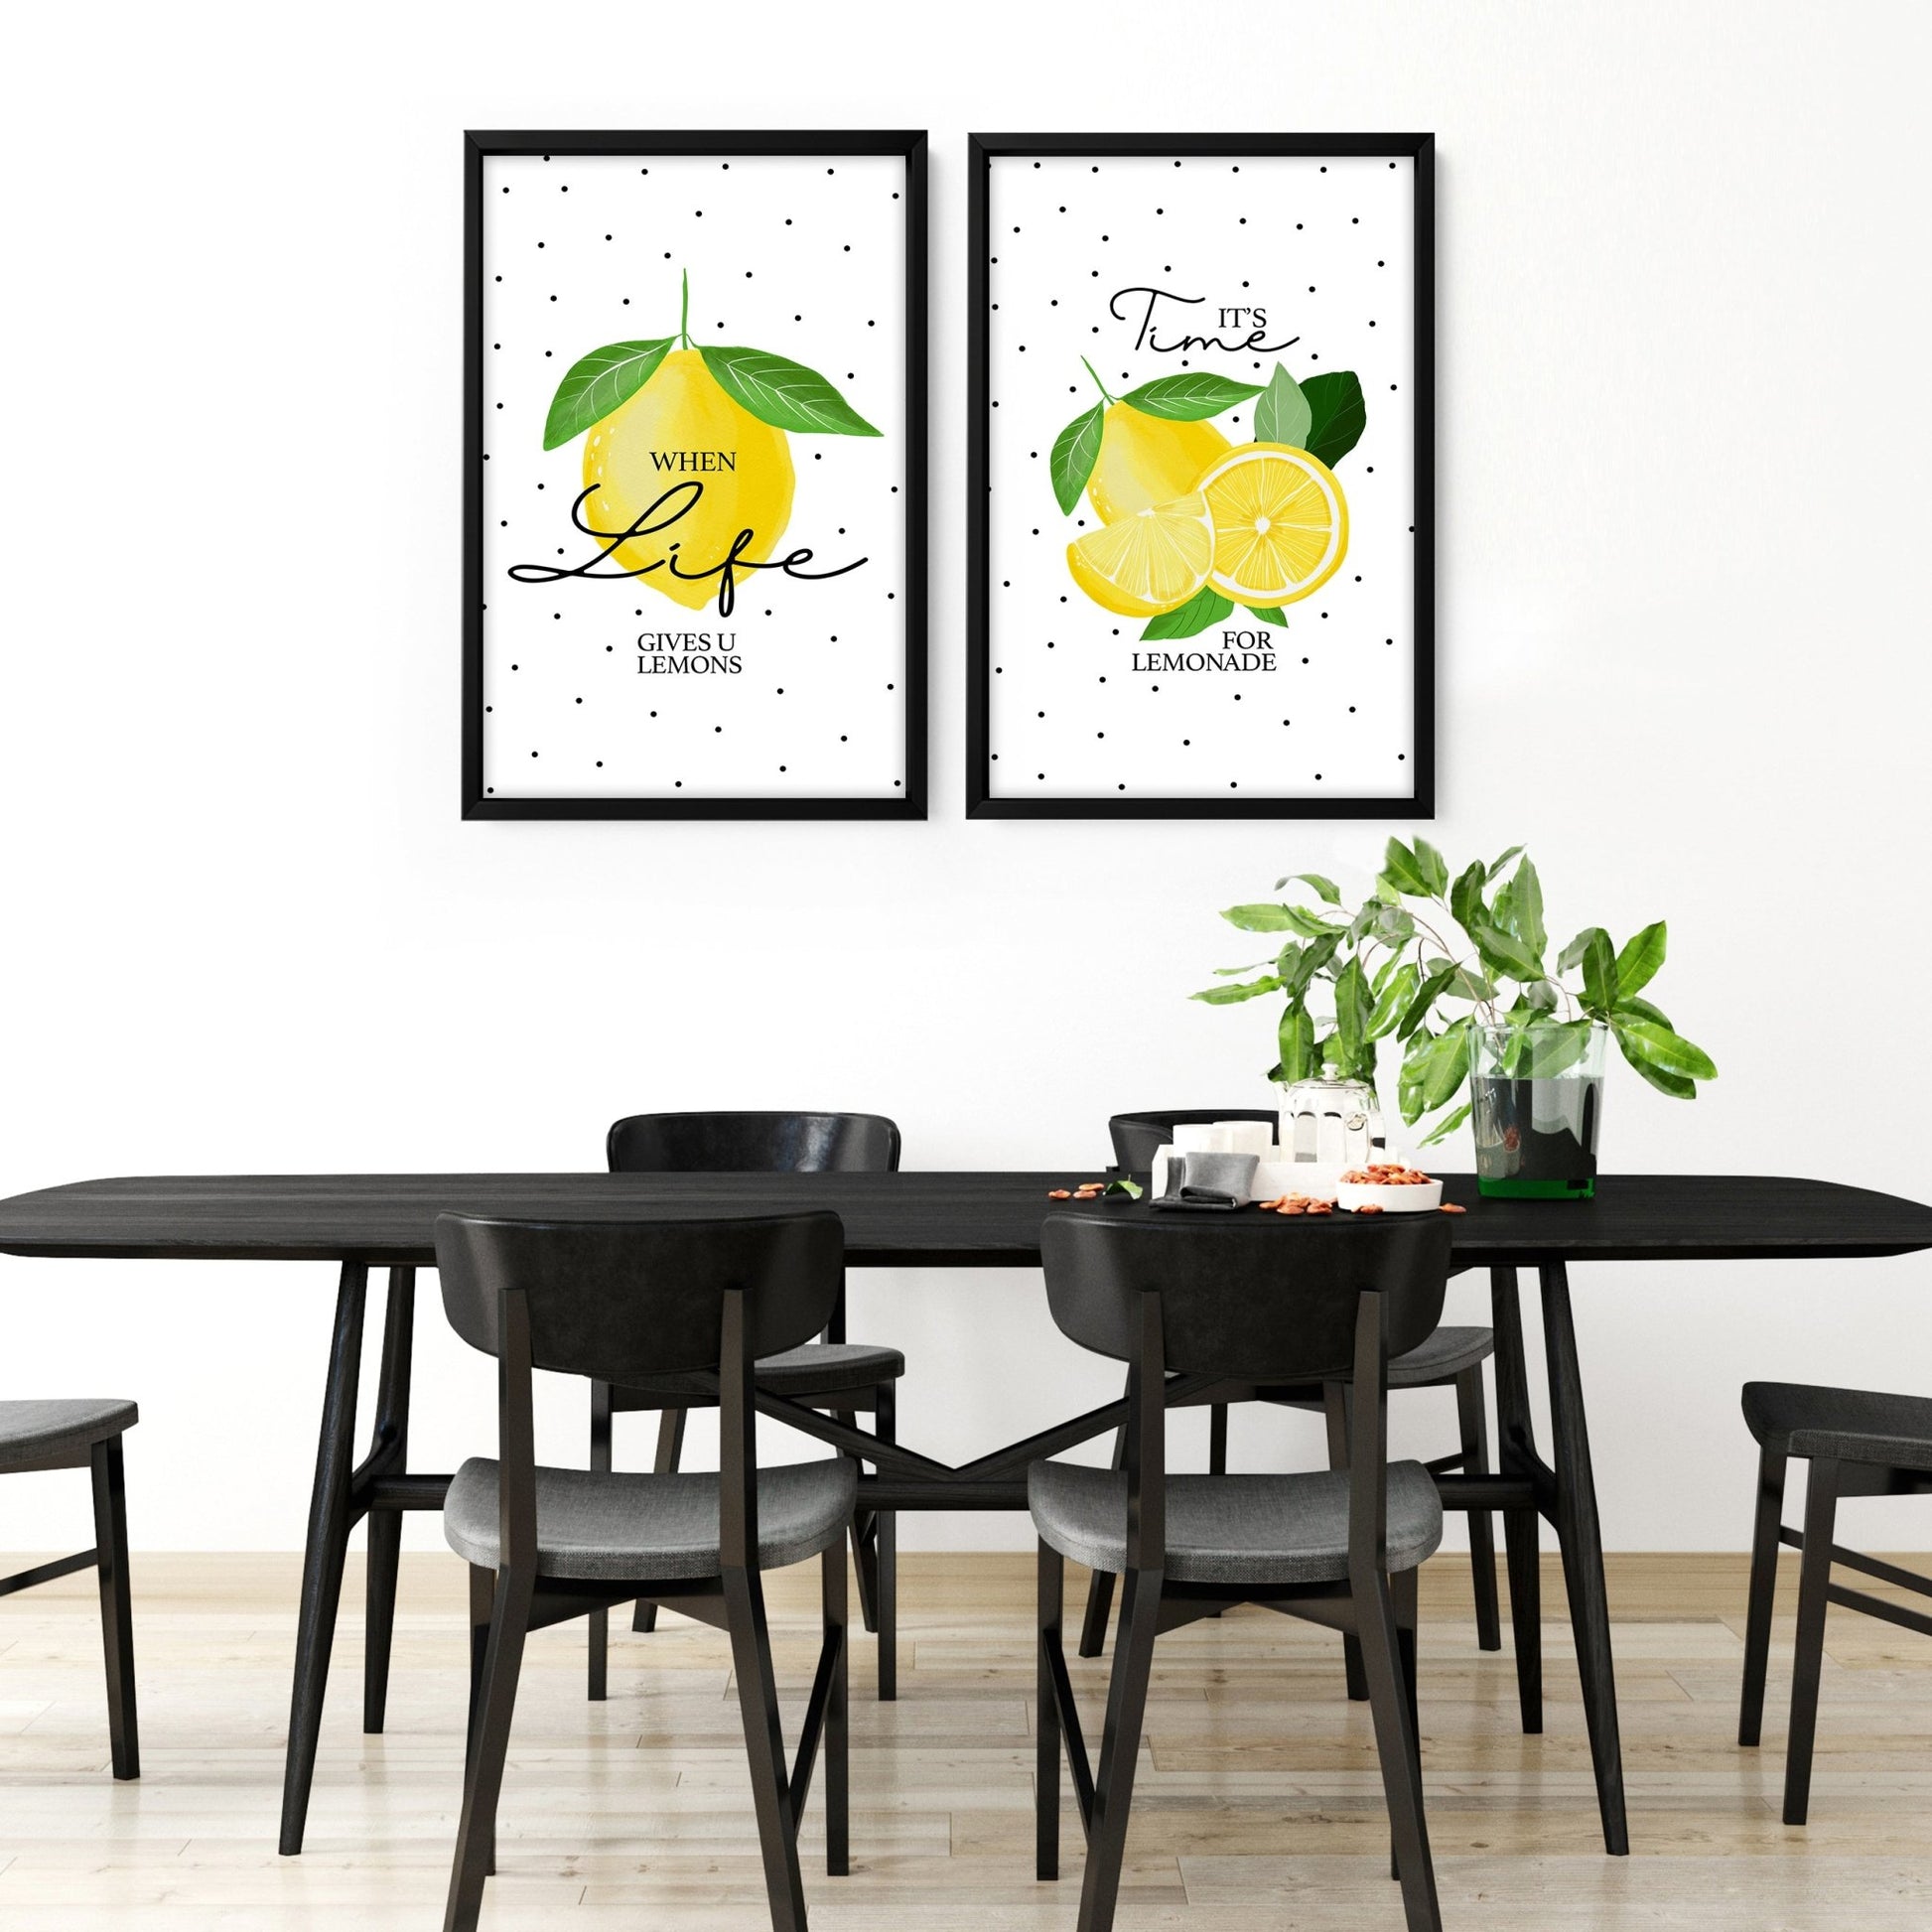 Lemons print | Set of 2 wall art prints - About Wall Art